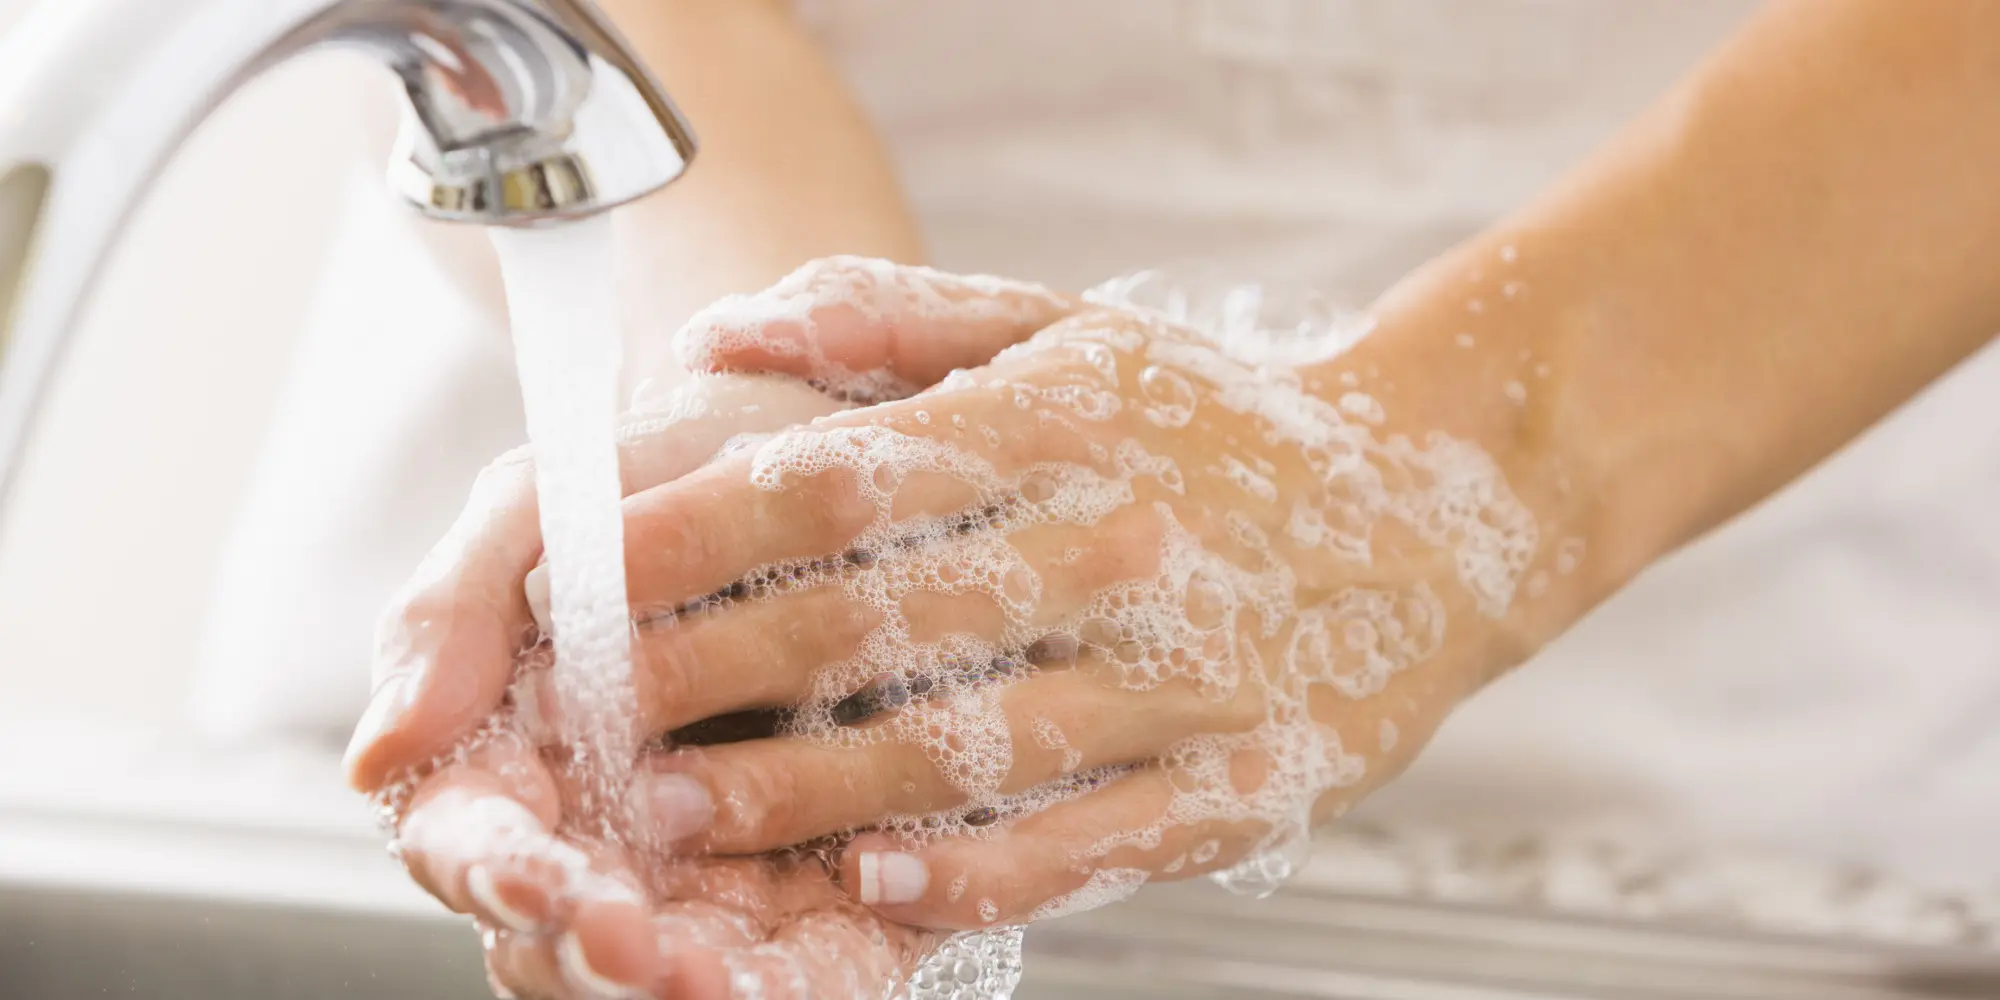 Kapan ya waktu terbaik untuk mencuci tangan agar bebas kuman dan bakteri? (Sumber Foto: era-soap.com)